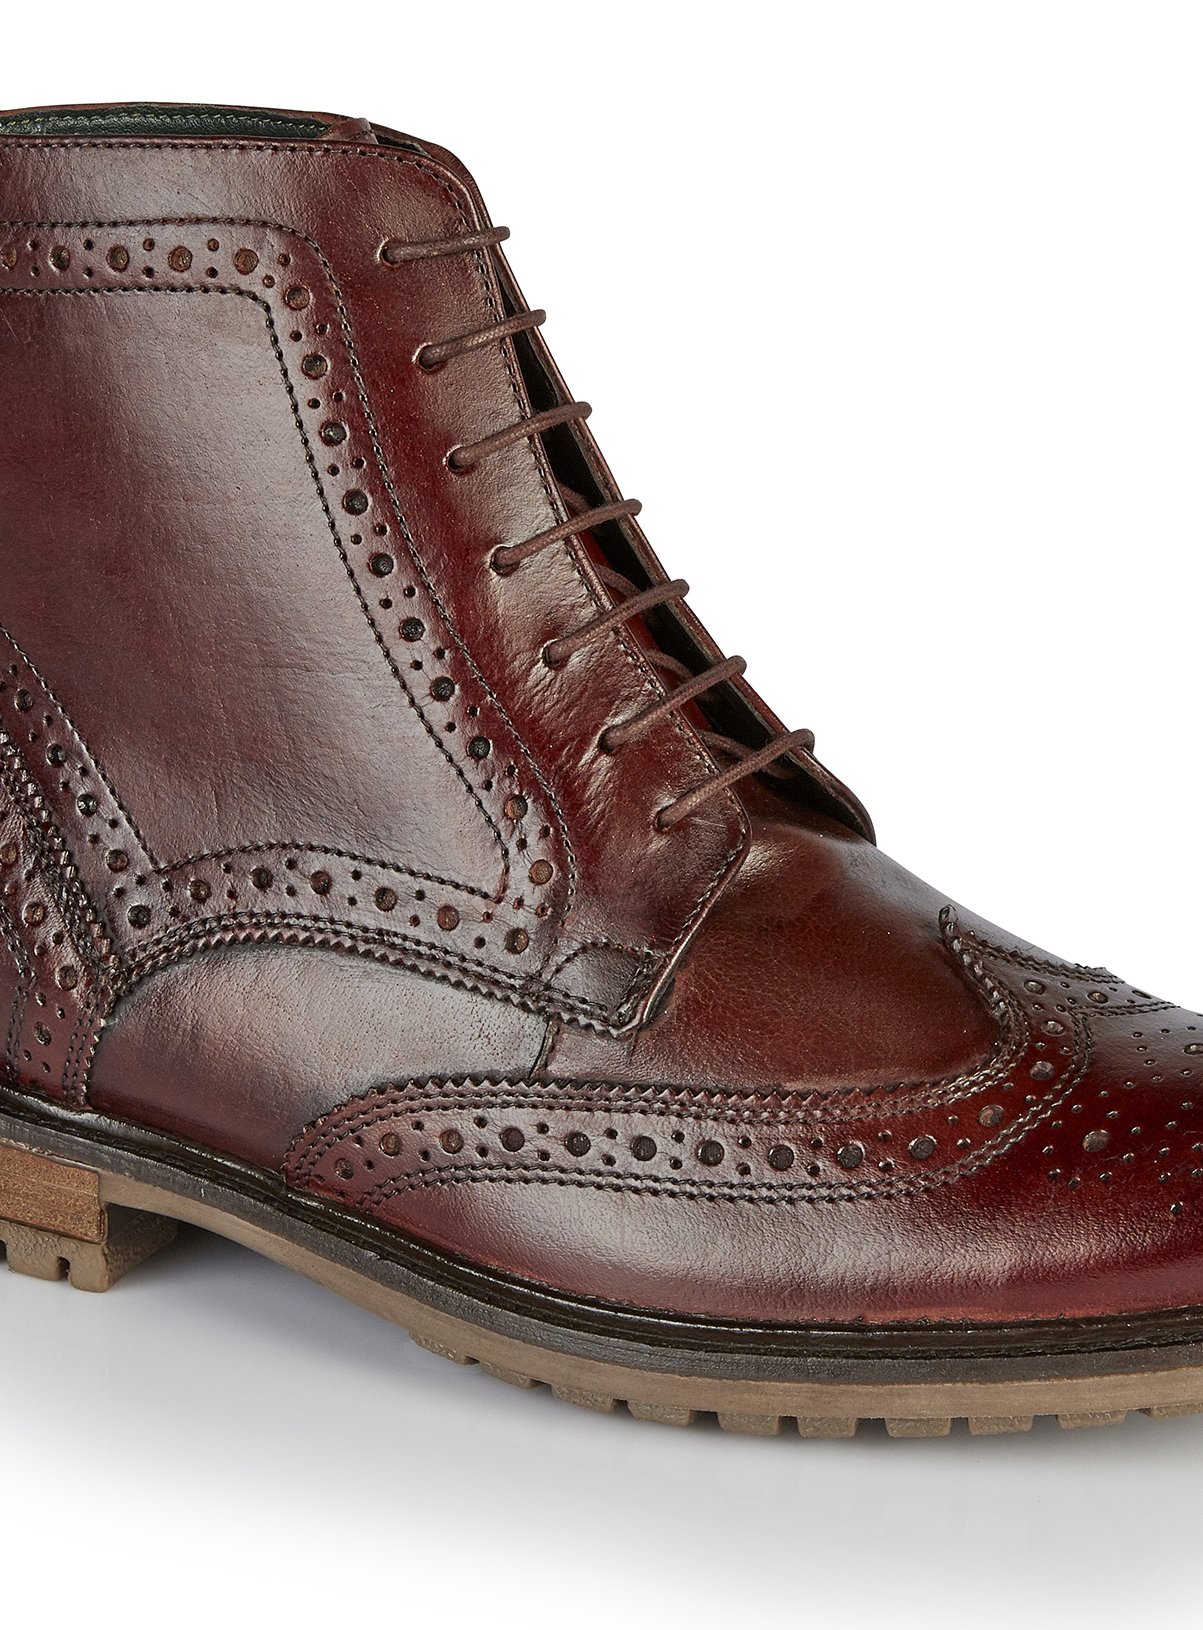 burgundy brogue boots